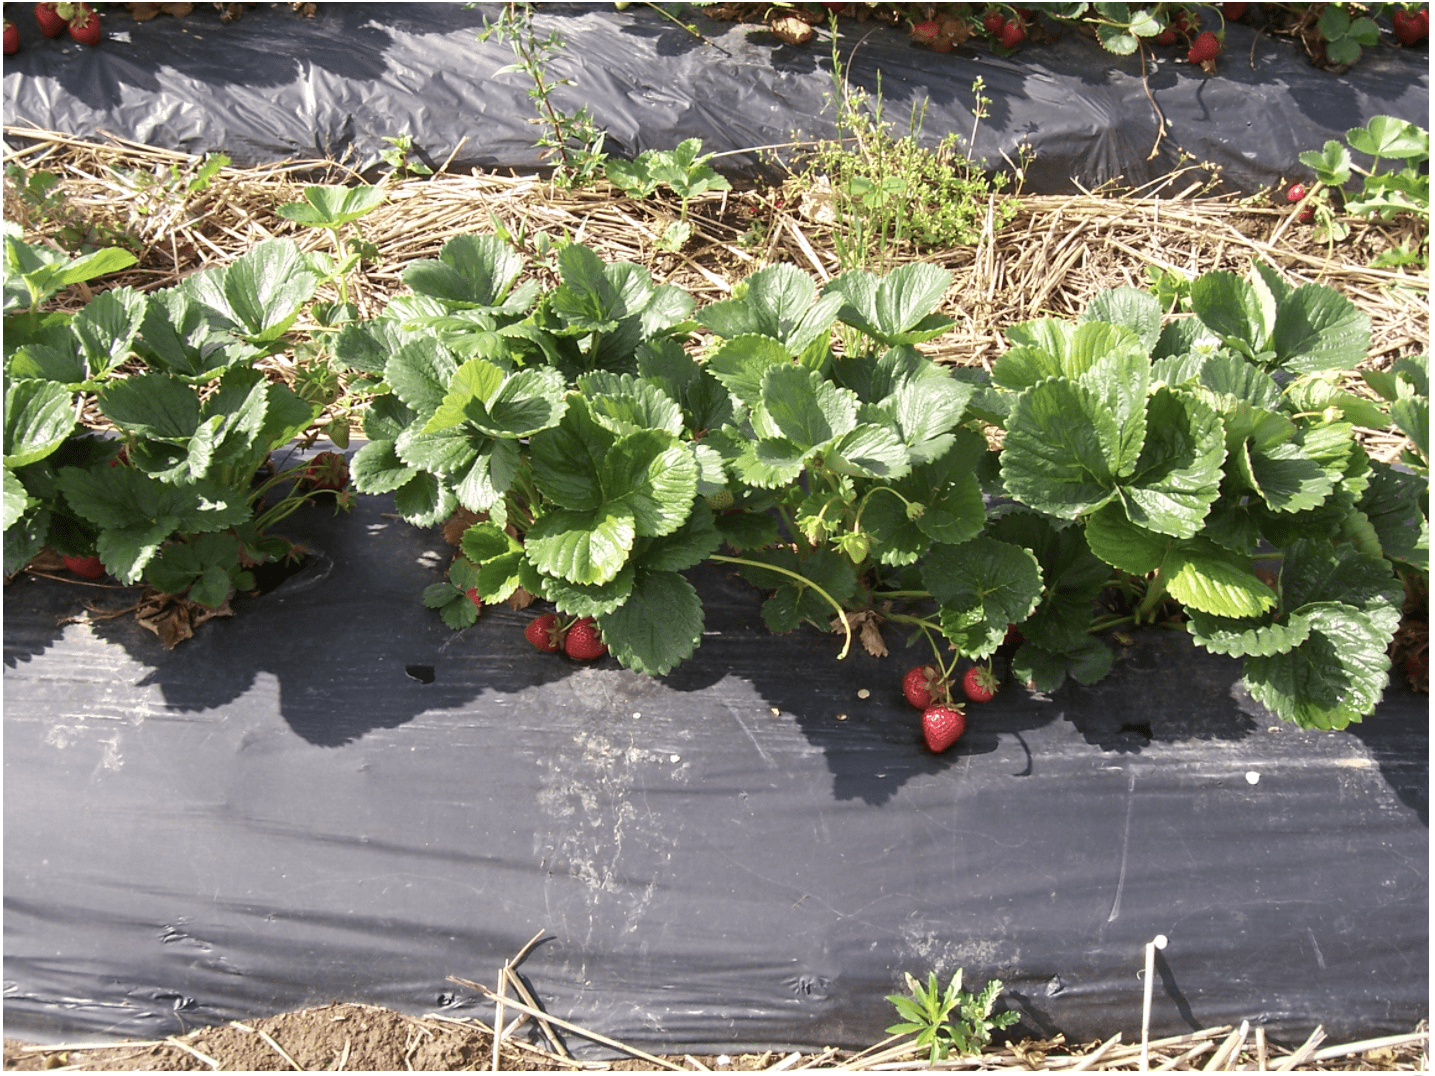 albion strawberries